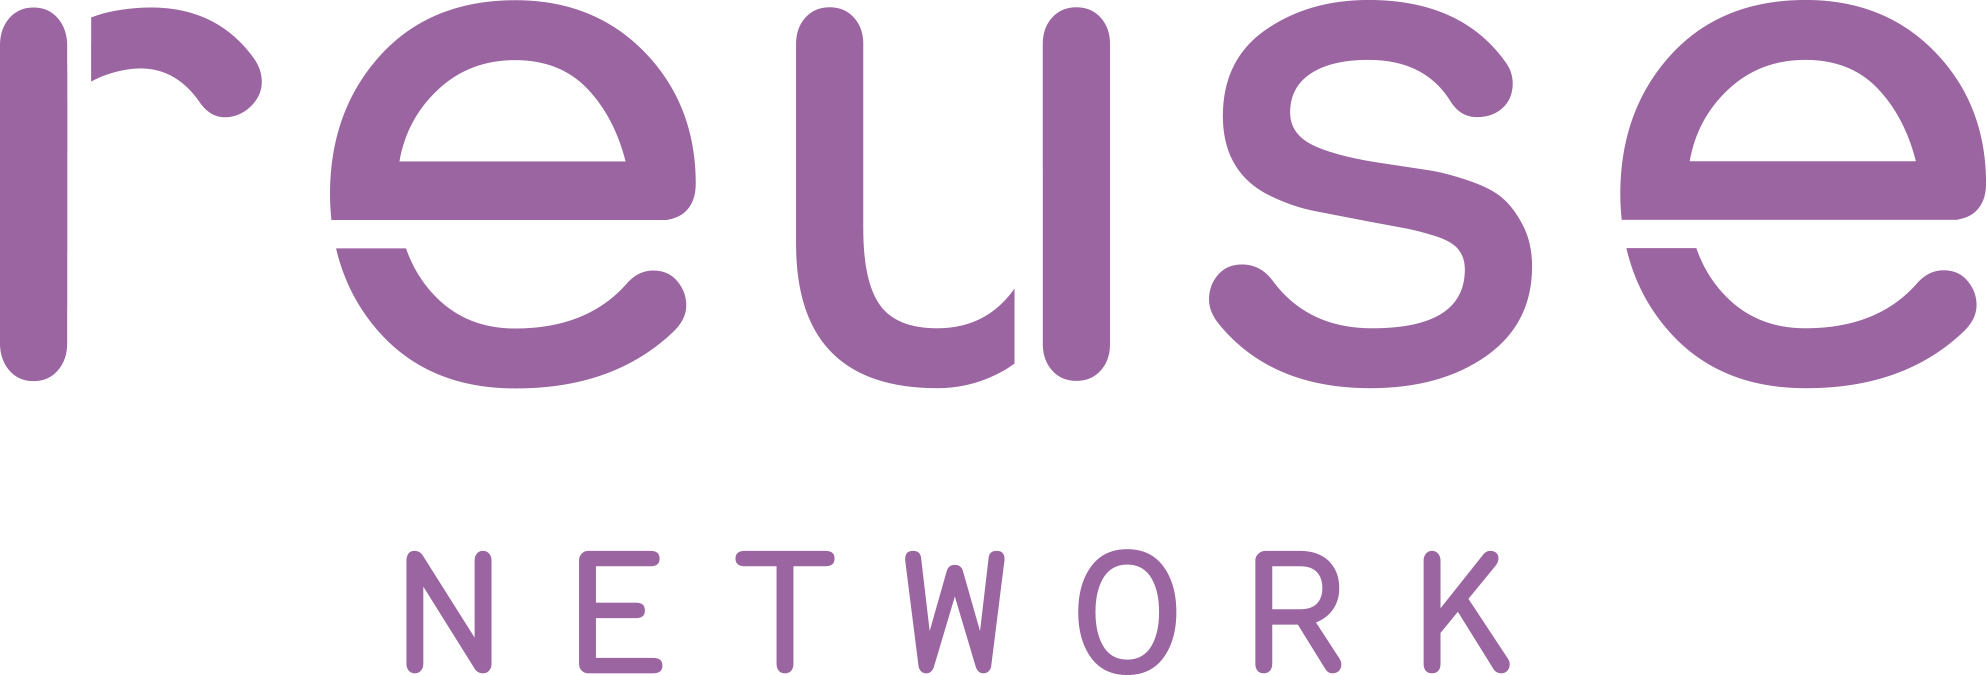 Reuse Network